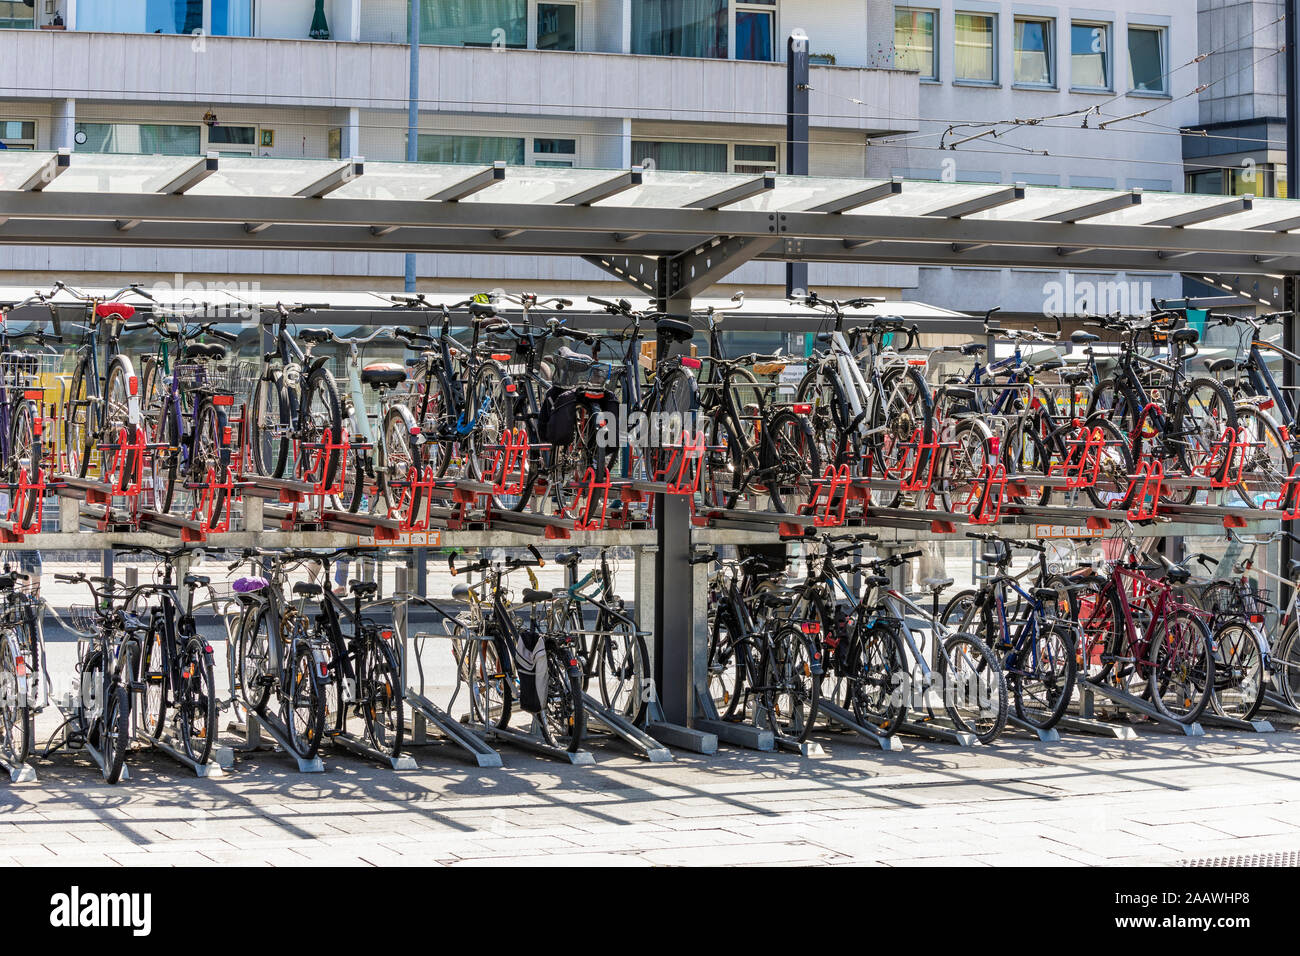 Bicycles parked at Konstablerwache, Frankfurt, Germany Stock Photo